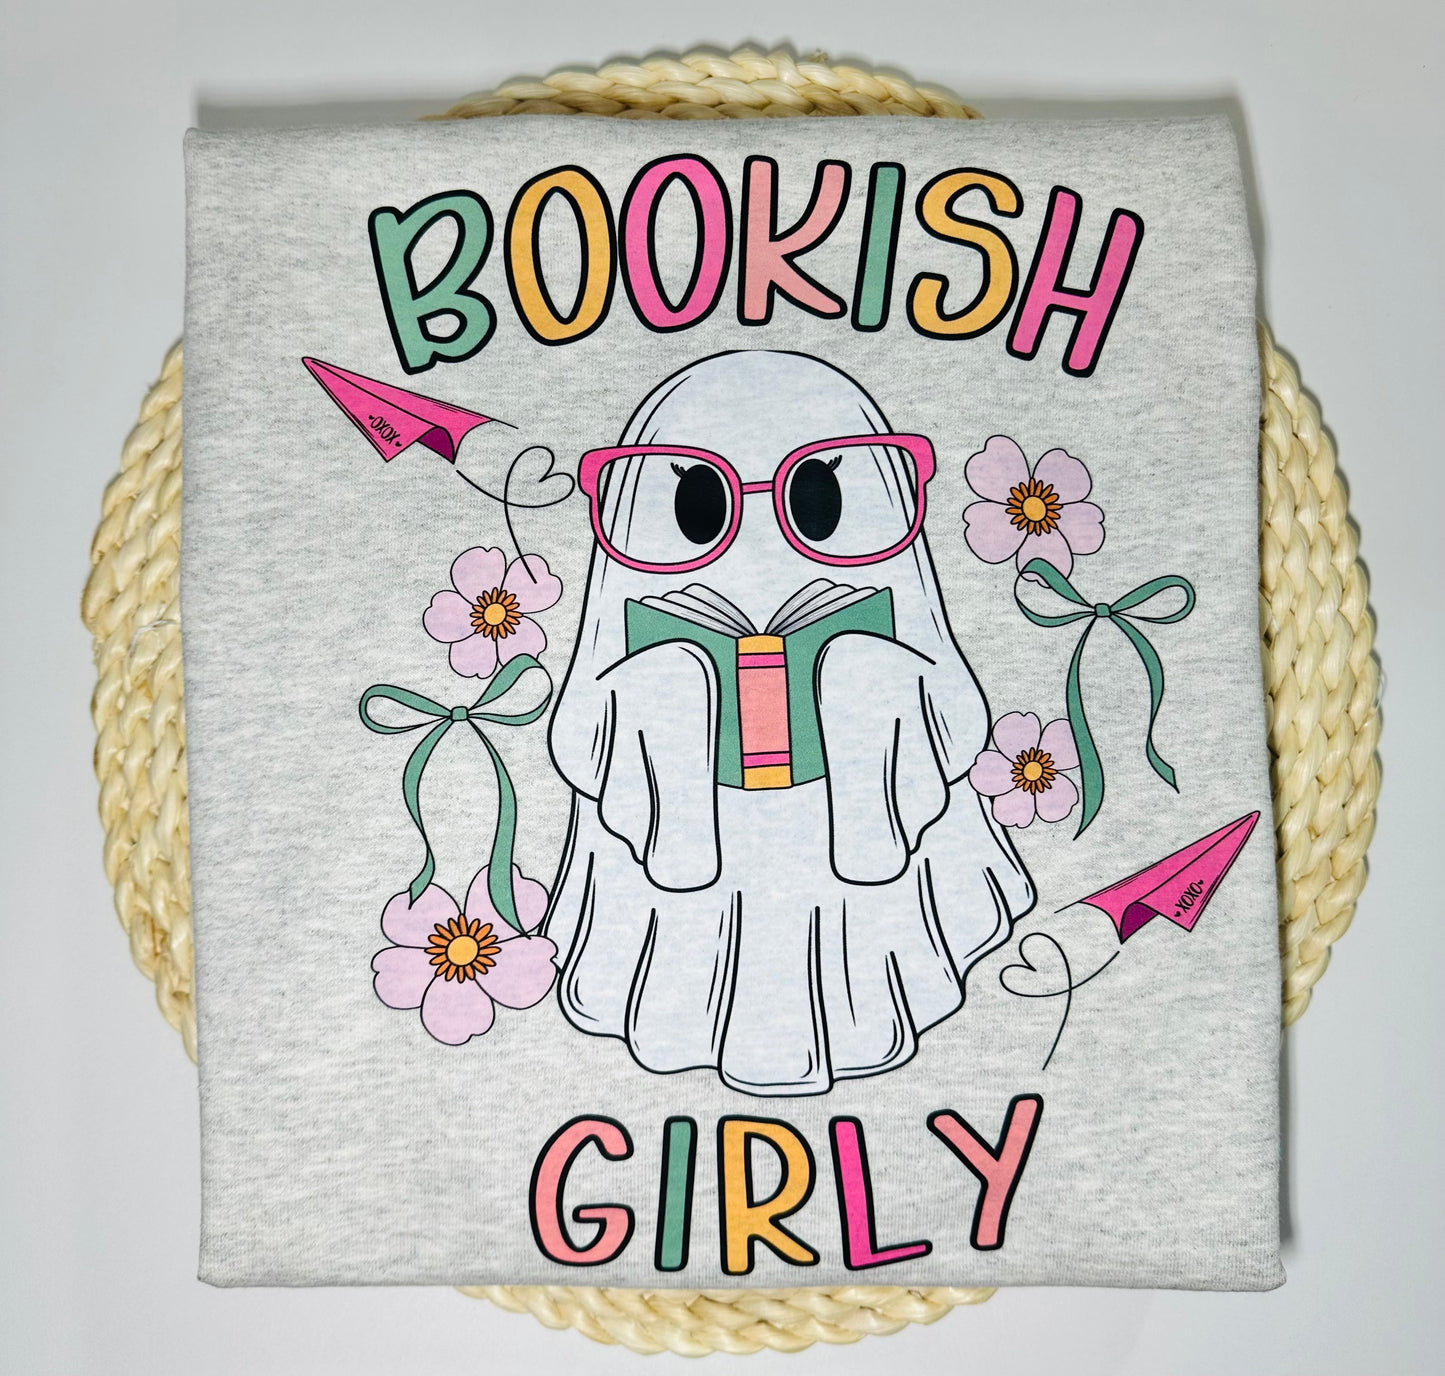 Bookish Girly